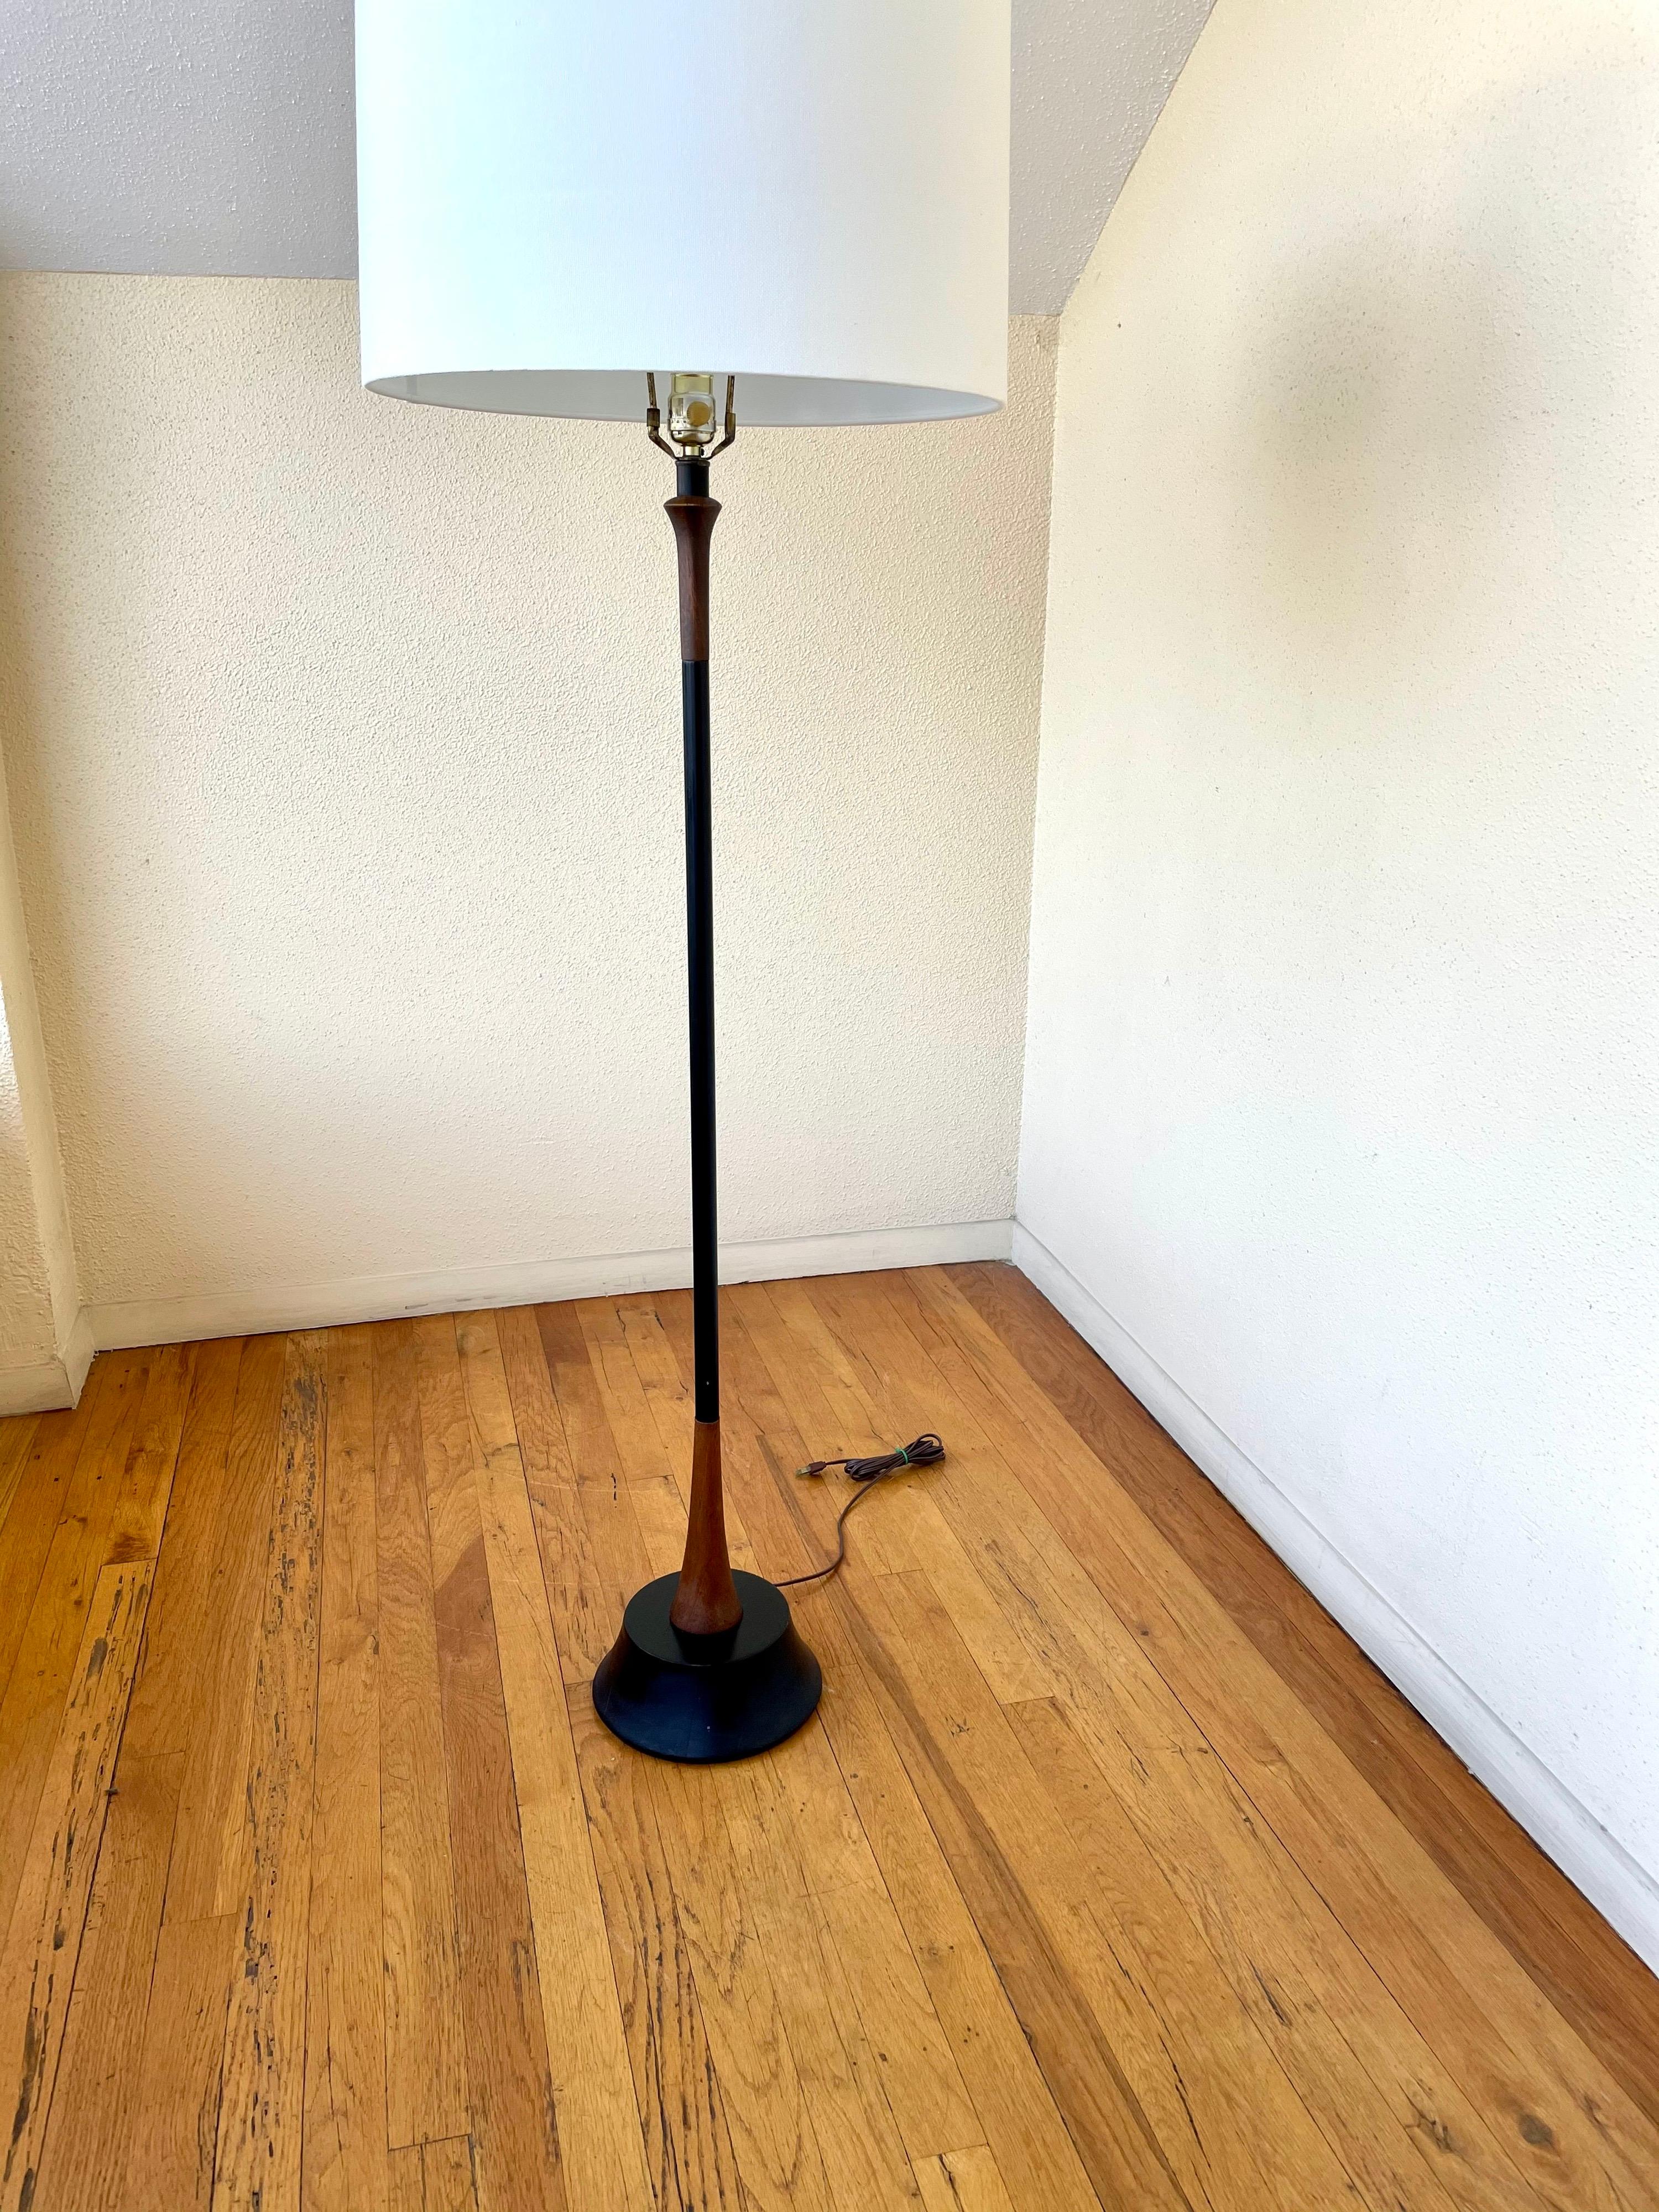 North American American Mid-Century Modern Floor Lamp by Laurel Lamp Company